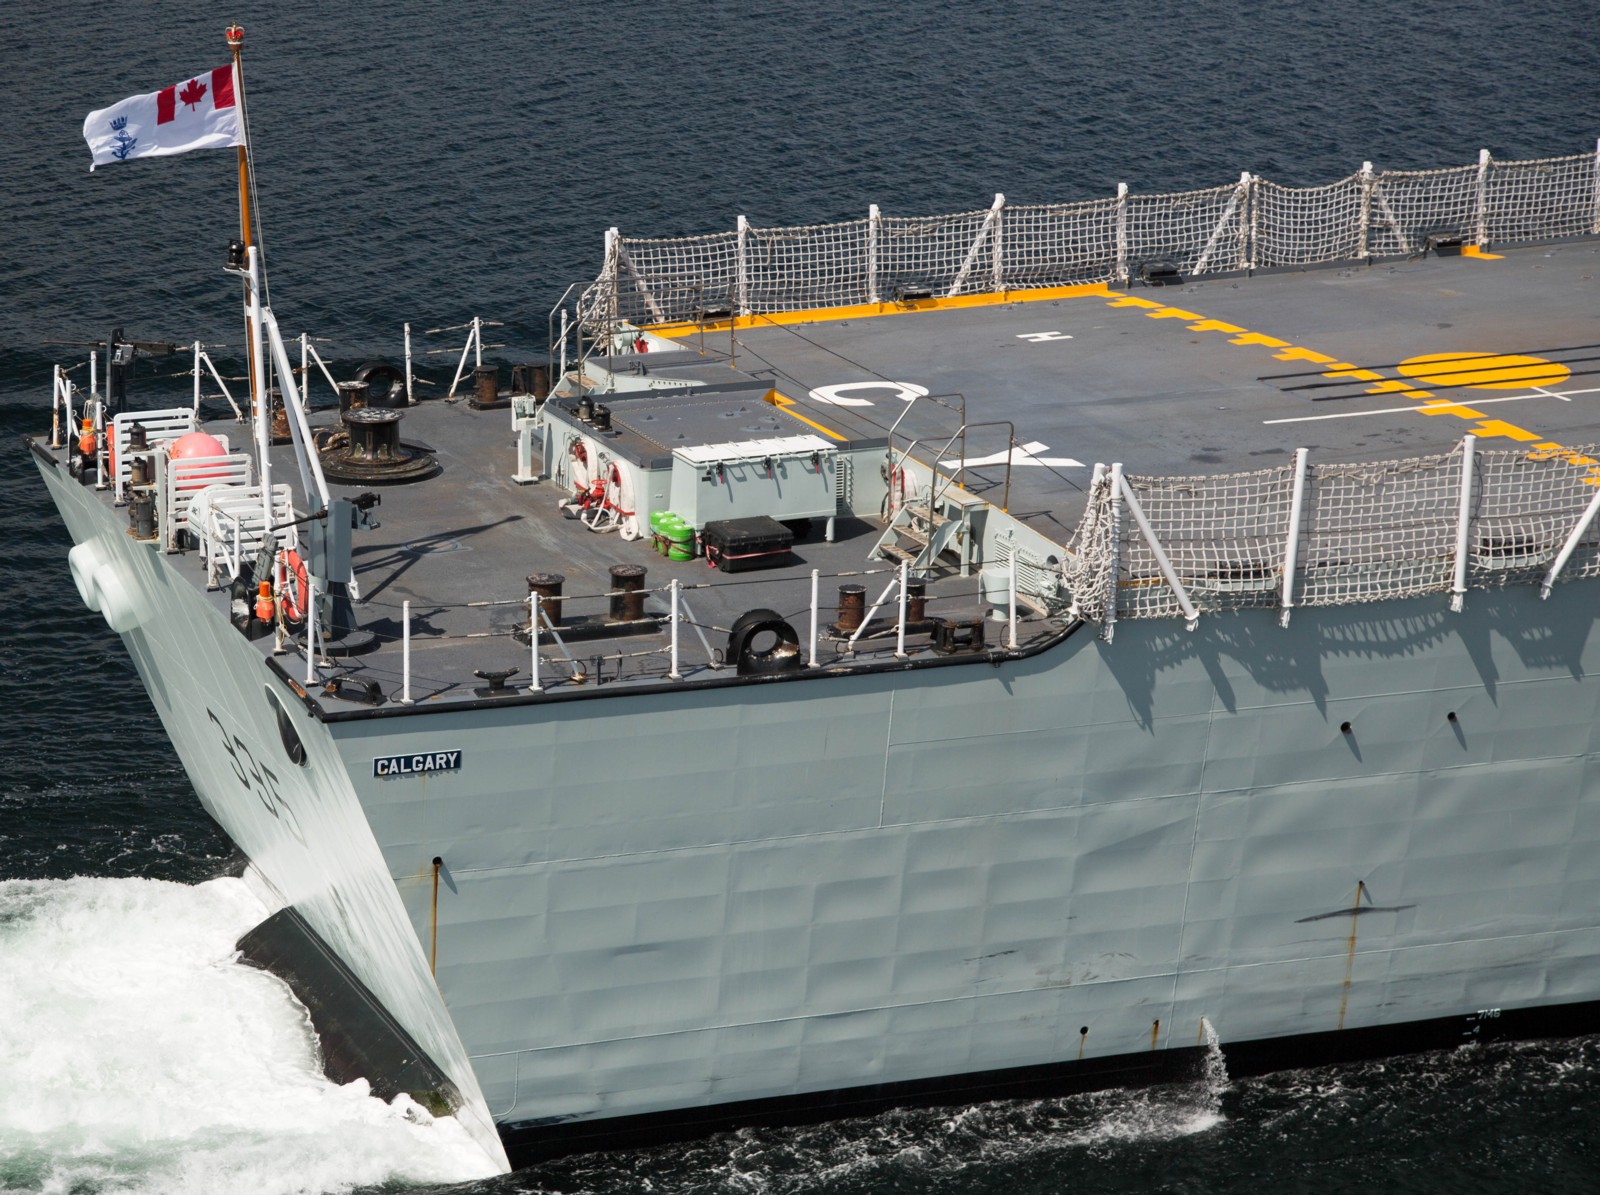 ffh-335 hmcs calgary halifax class helicopter patrol frigate ncsm royal canadian navy 67